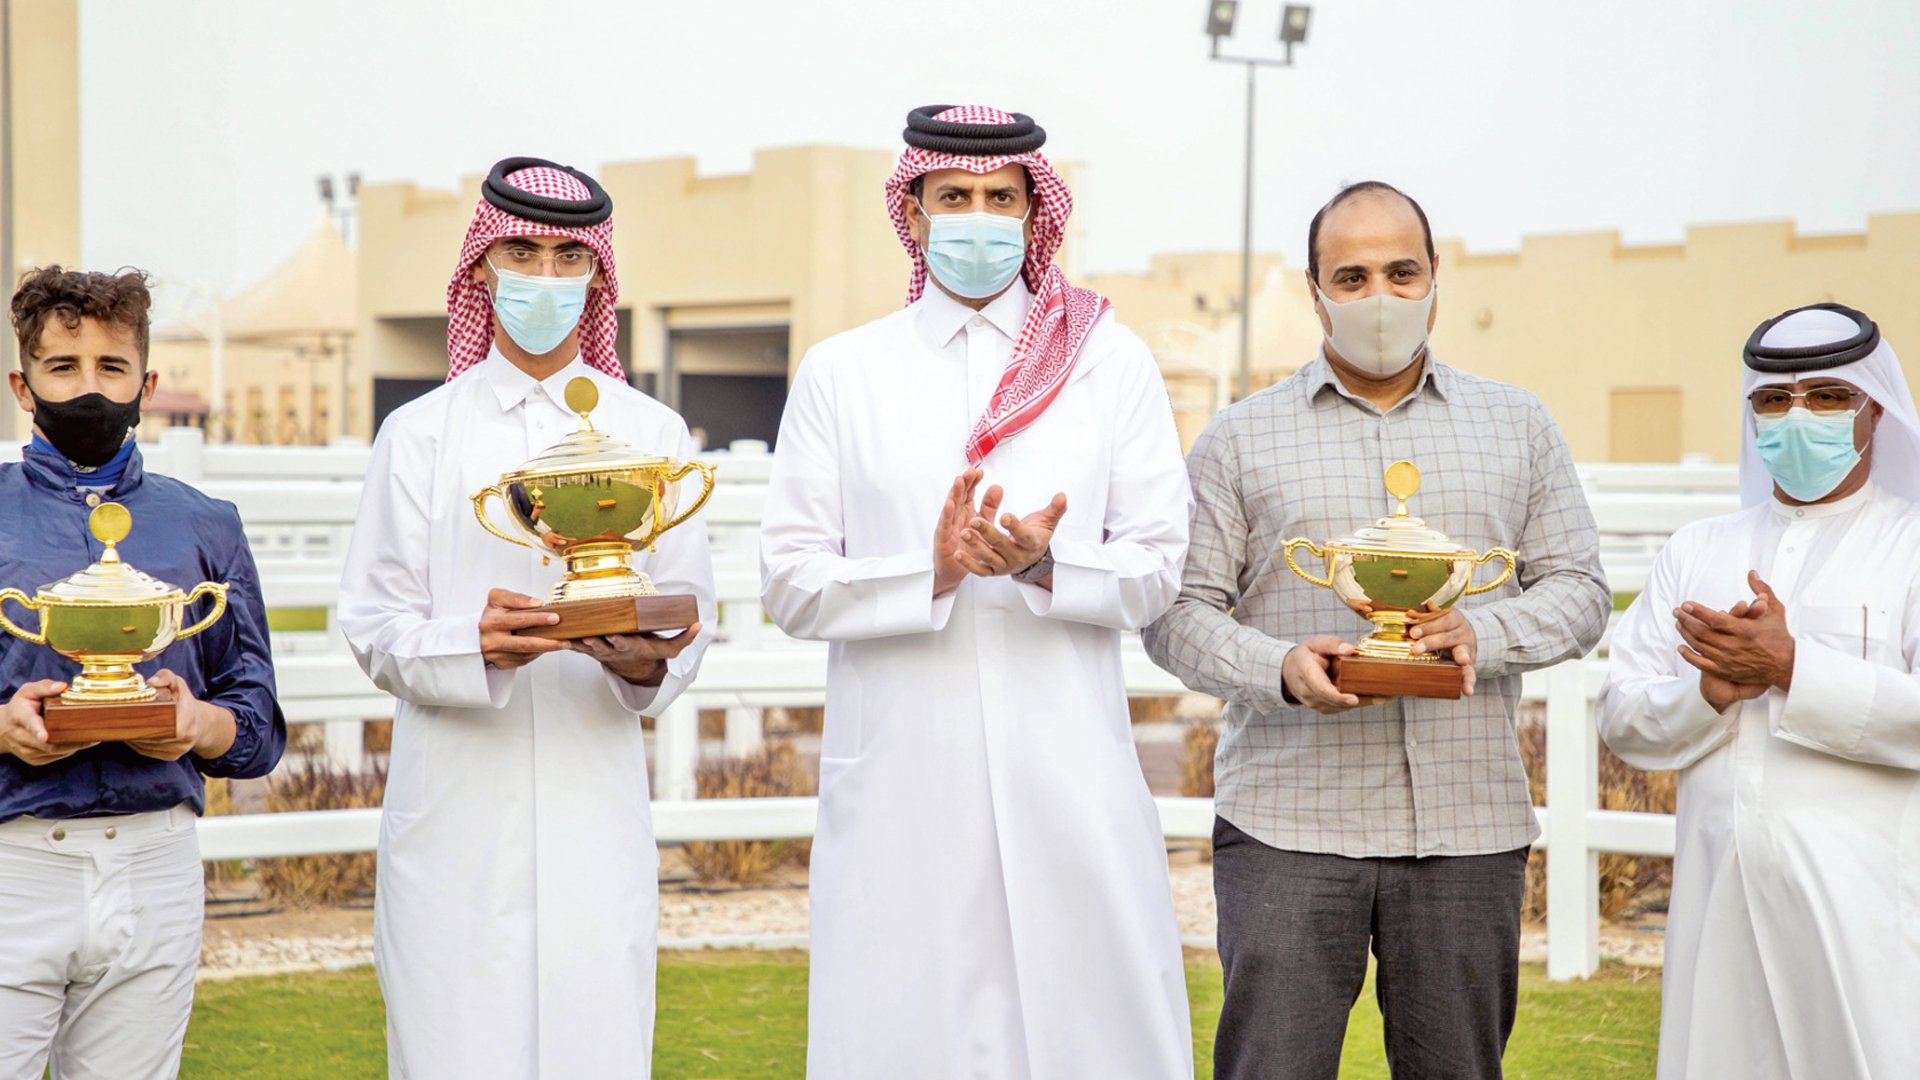 Hamad bin Abdulrahman al-Attiyah crowns the winners 